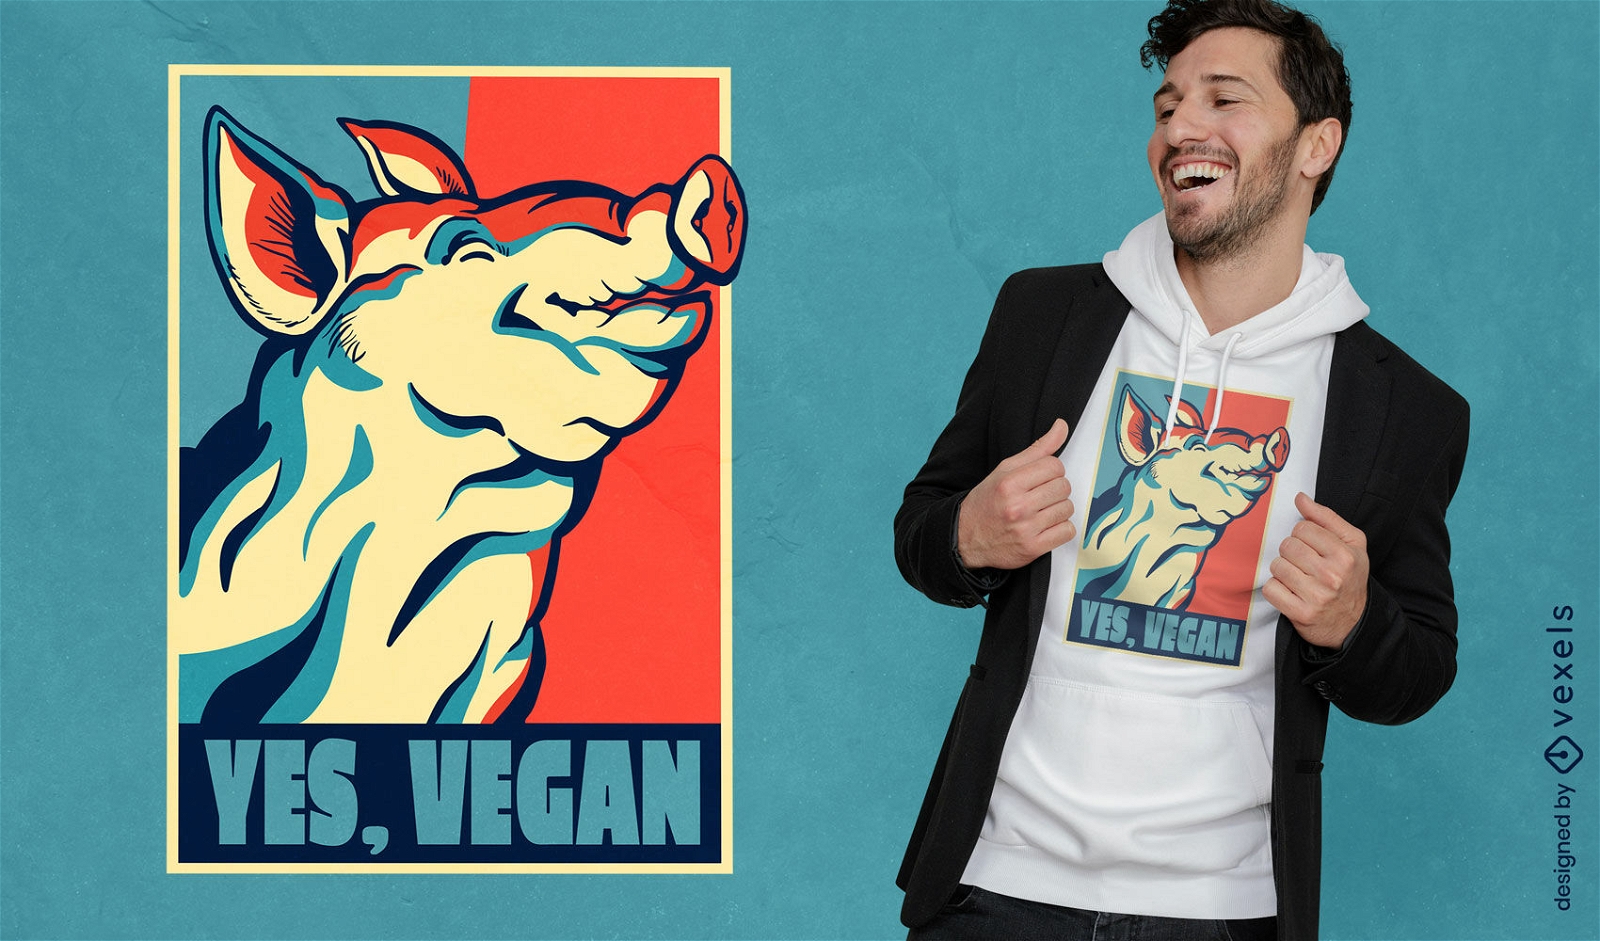 Pig vegan poster t-shirt design